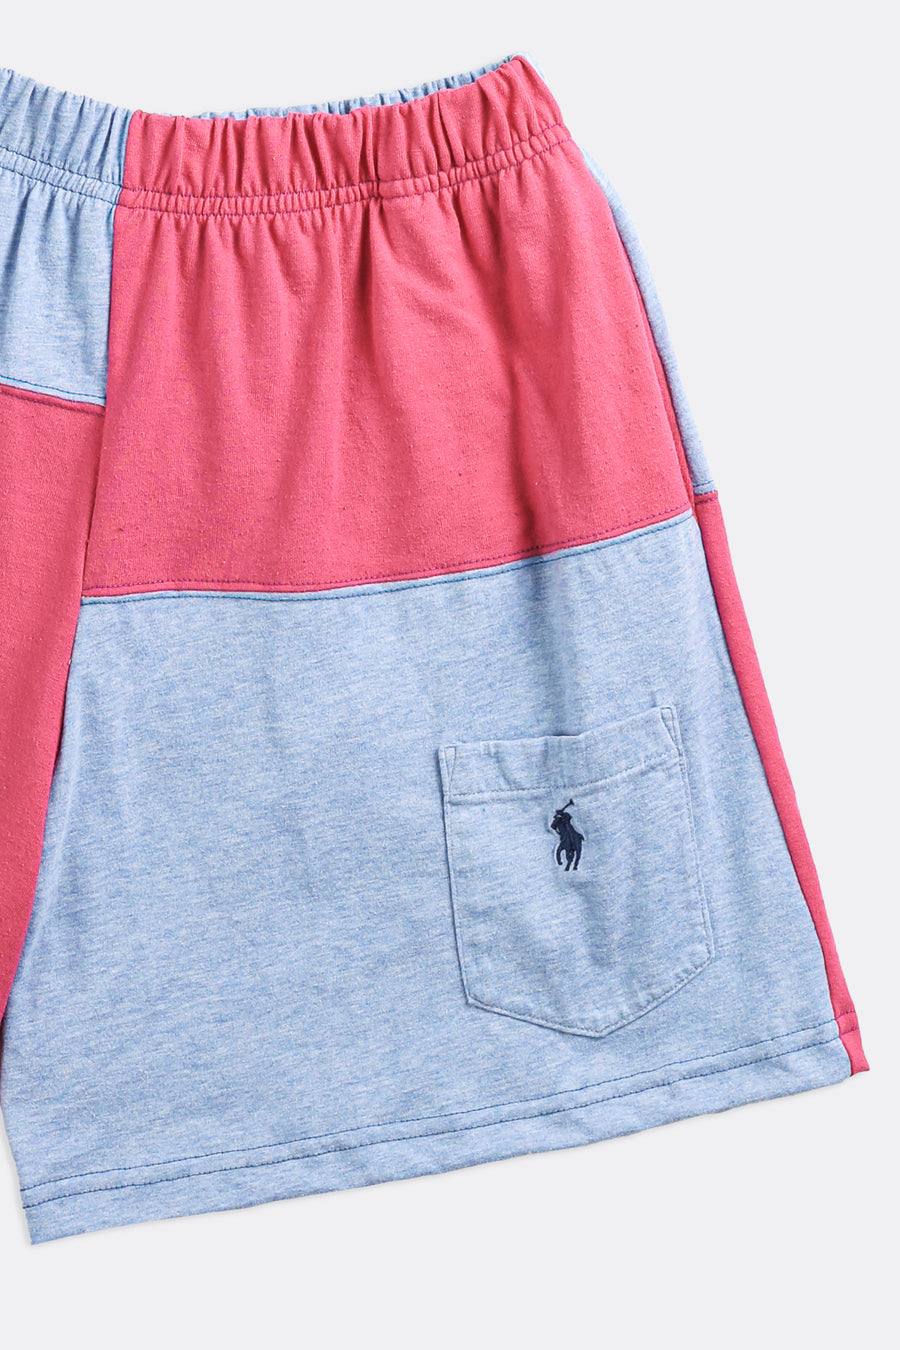 Unisex Rework Polo Patchwork Tee Shorts - Women's S, Men's XS